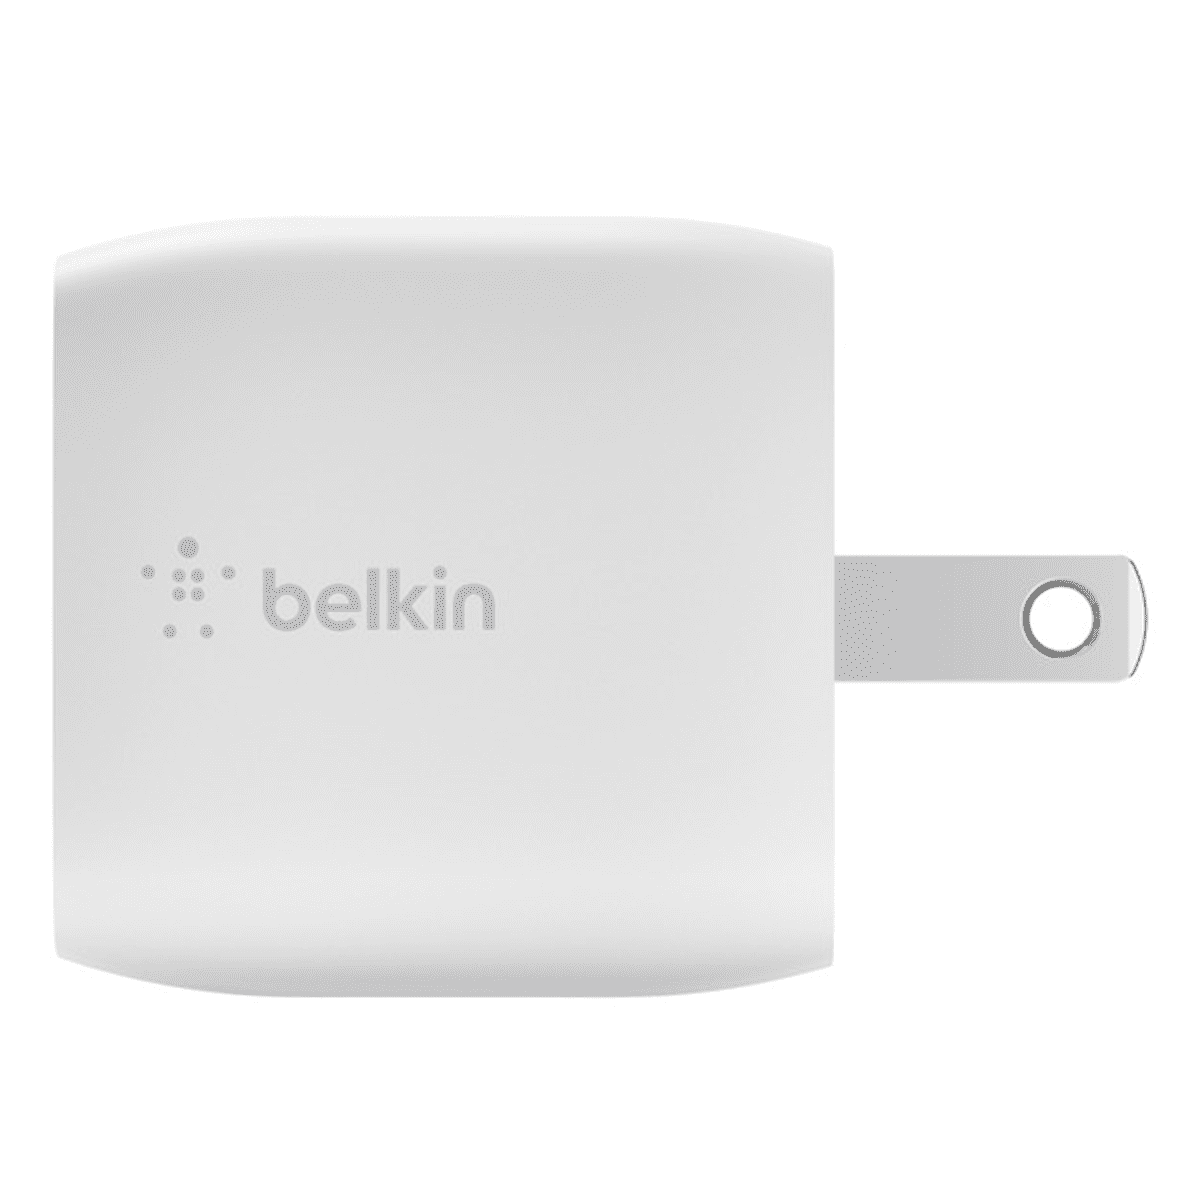 Belkin Cargador de pared USB tipo C PD de 40 W para iPhone con cable C a  Lightning incluido, puertos…Ver más Belkin Cargador de pared USB tipo C PD  de